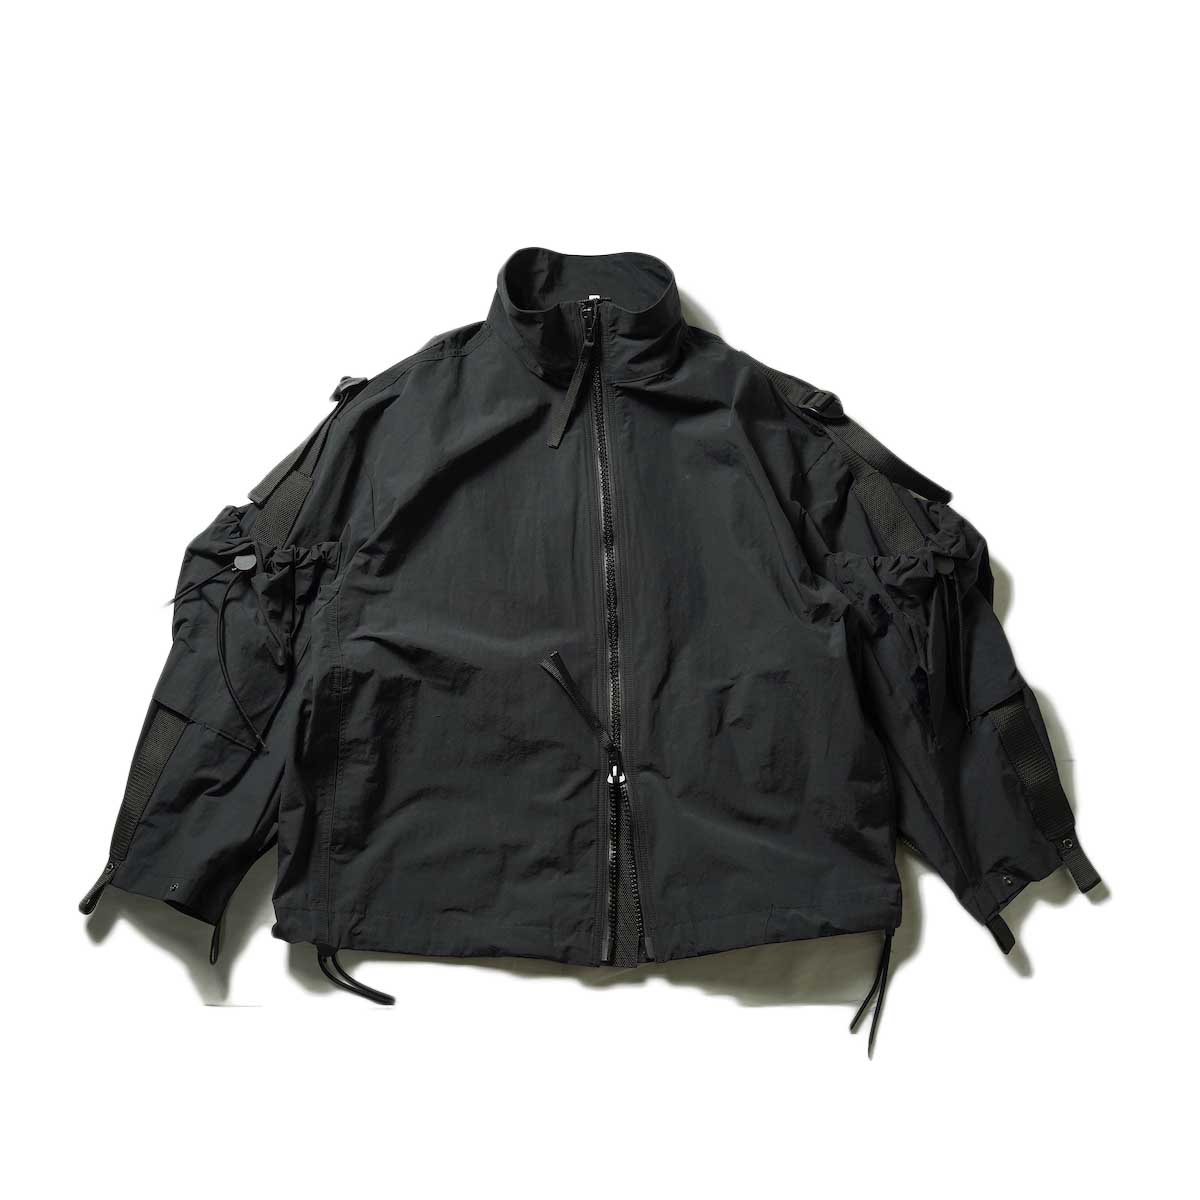 N.HOOLYWOOD / 9231-BL01-003 pieces Military Jacket (BLACK)